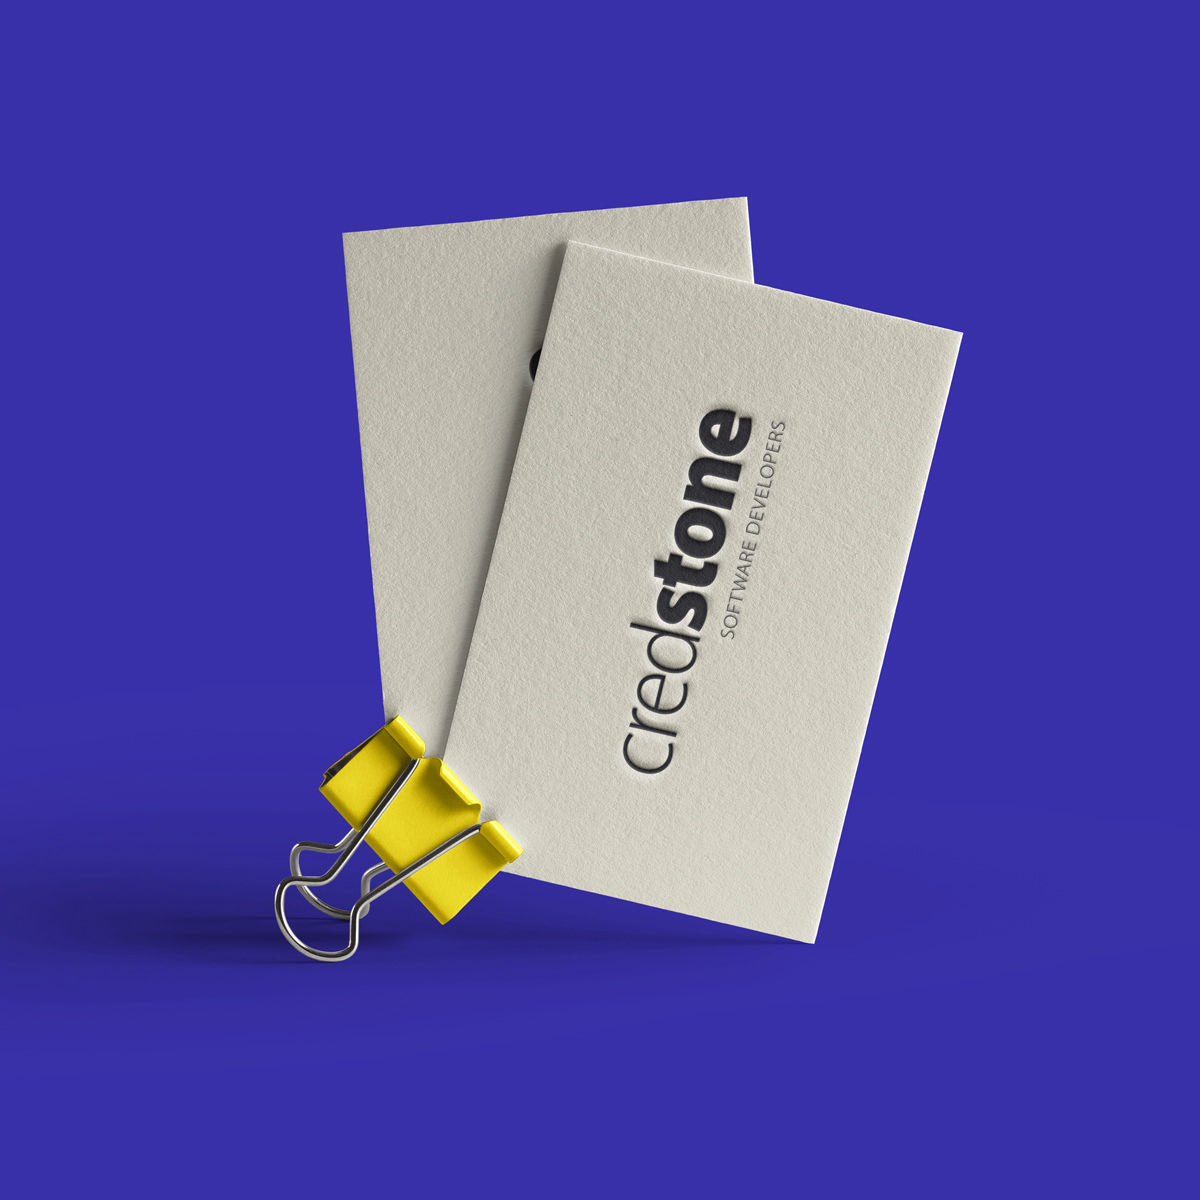 Credstone - projekt logo dla marki